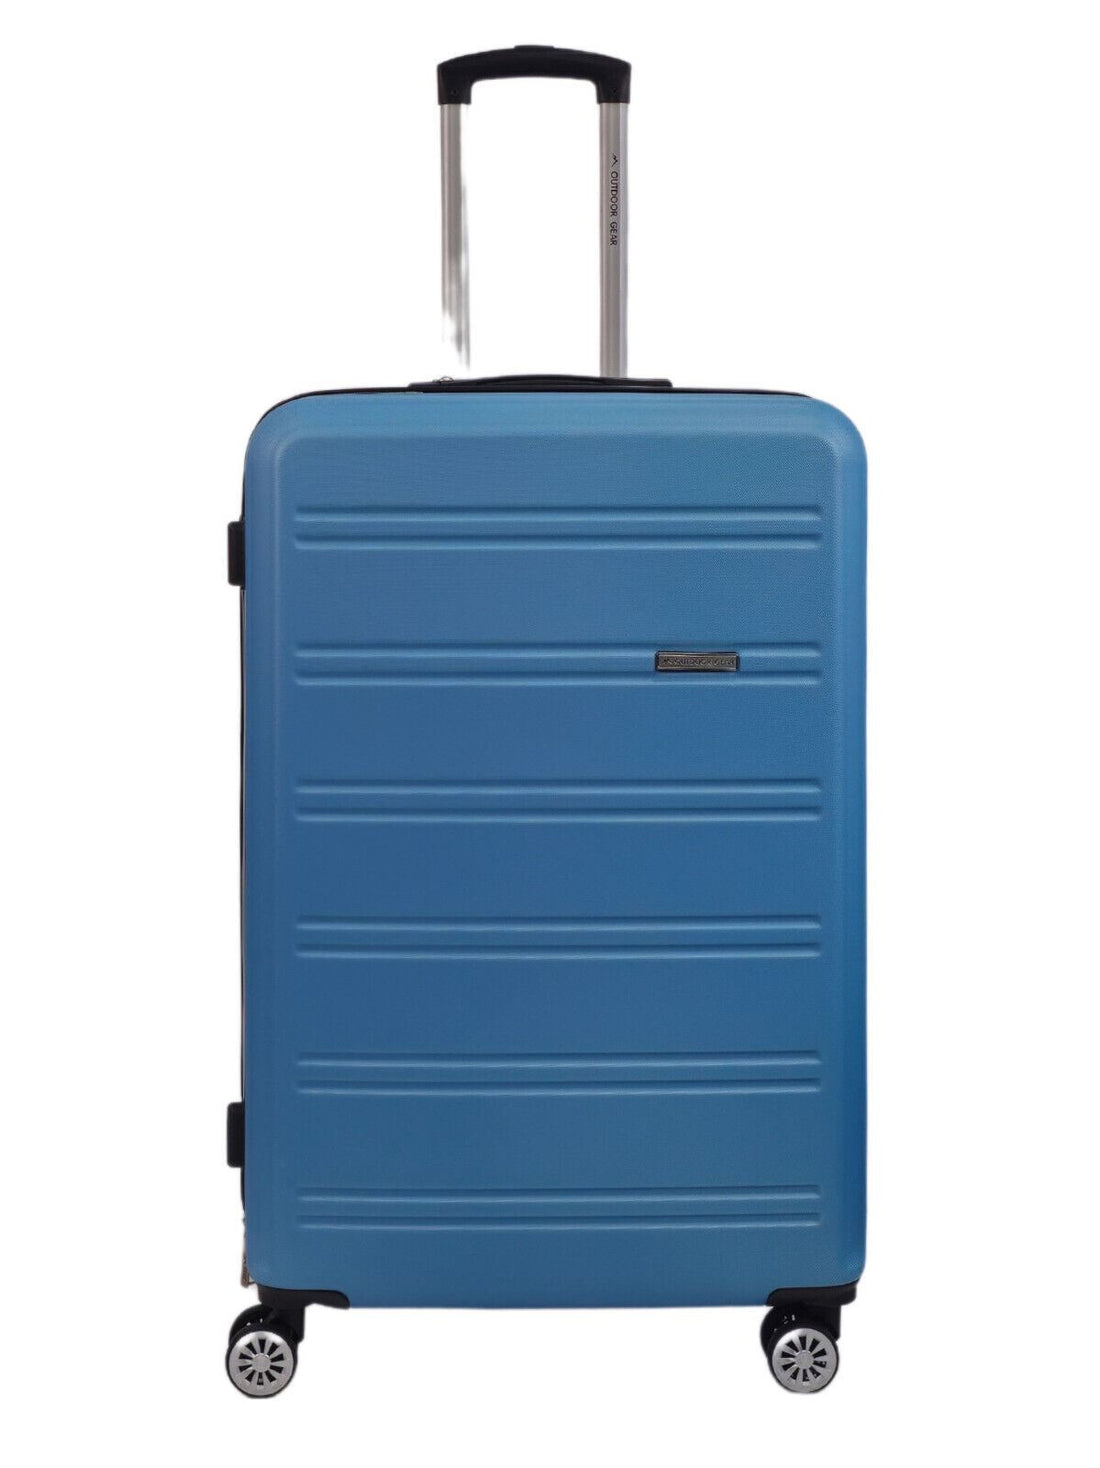 Hardshell Blue Suitcase Robust ABS Lightweight Luggage Bag